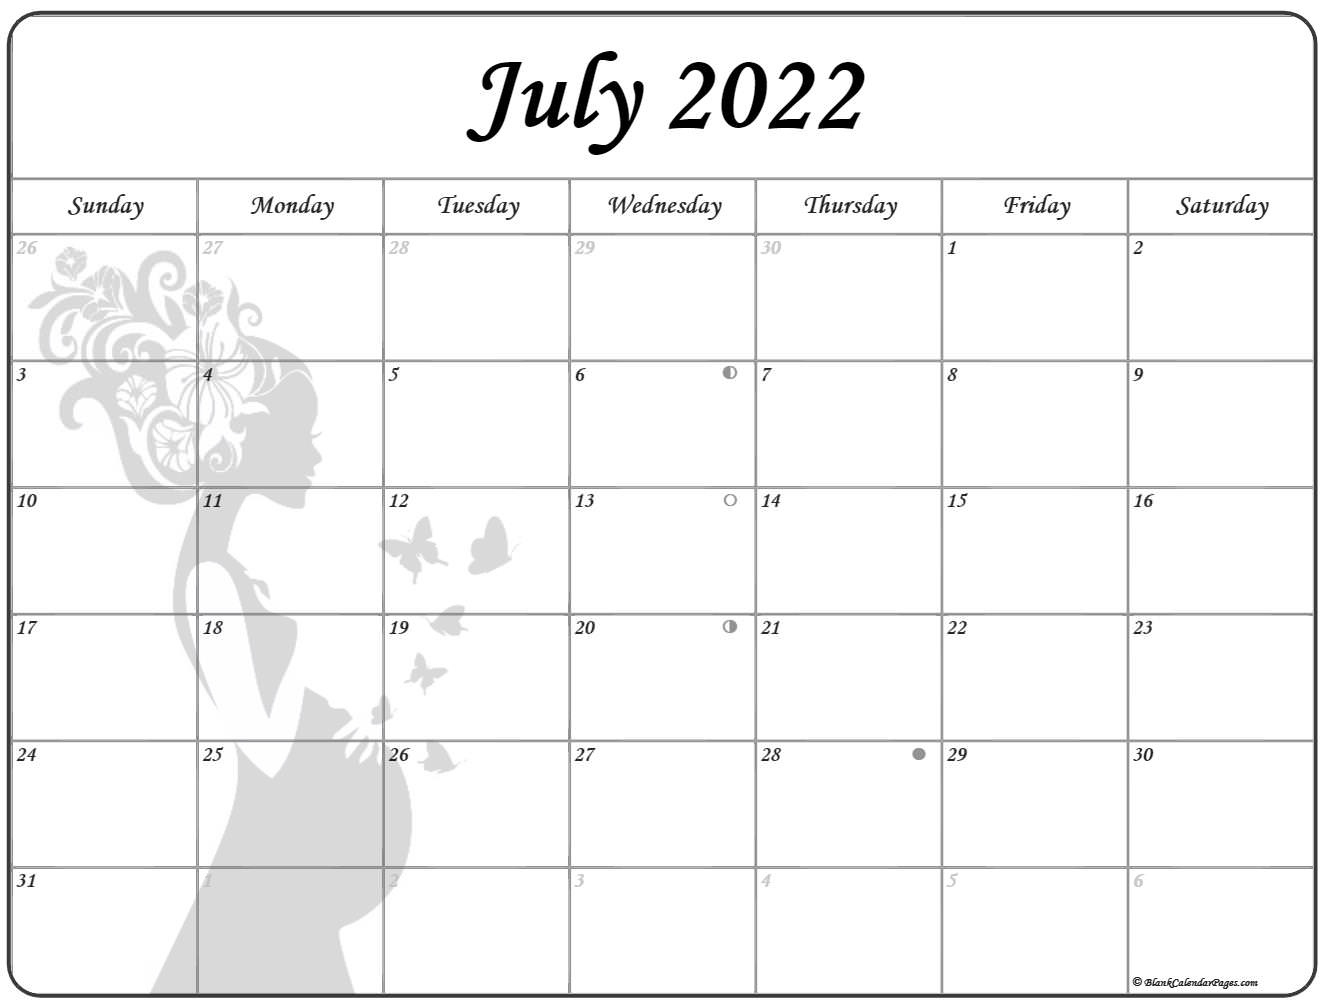 July 2022 Pregnancy Calendar | Fertility Calendar